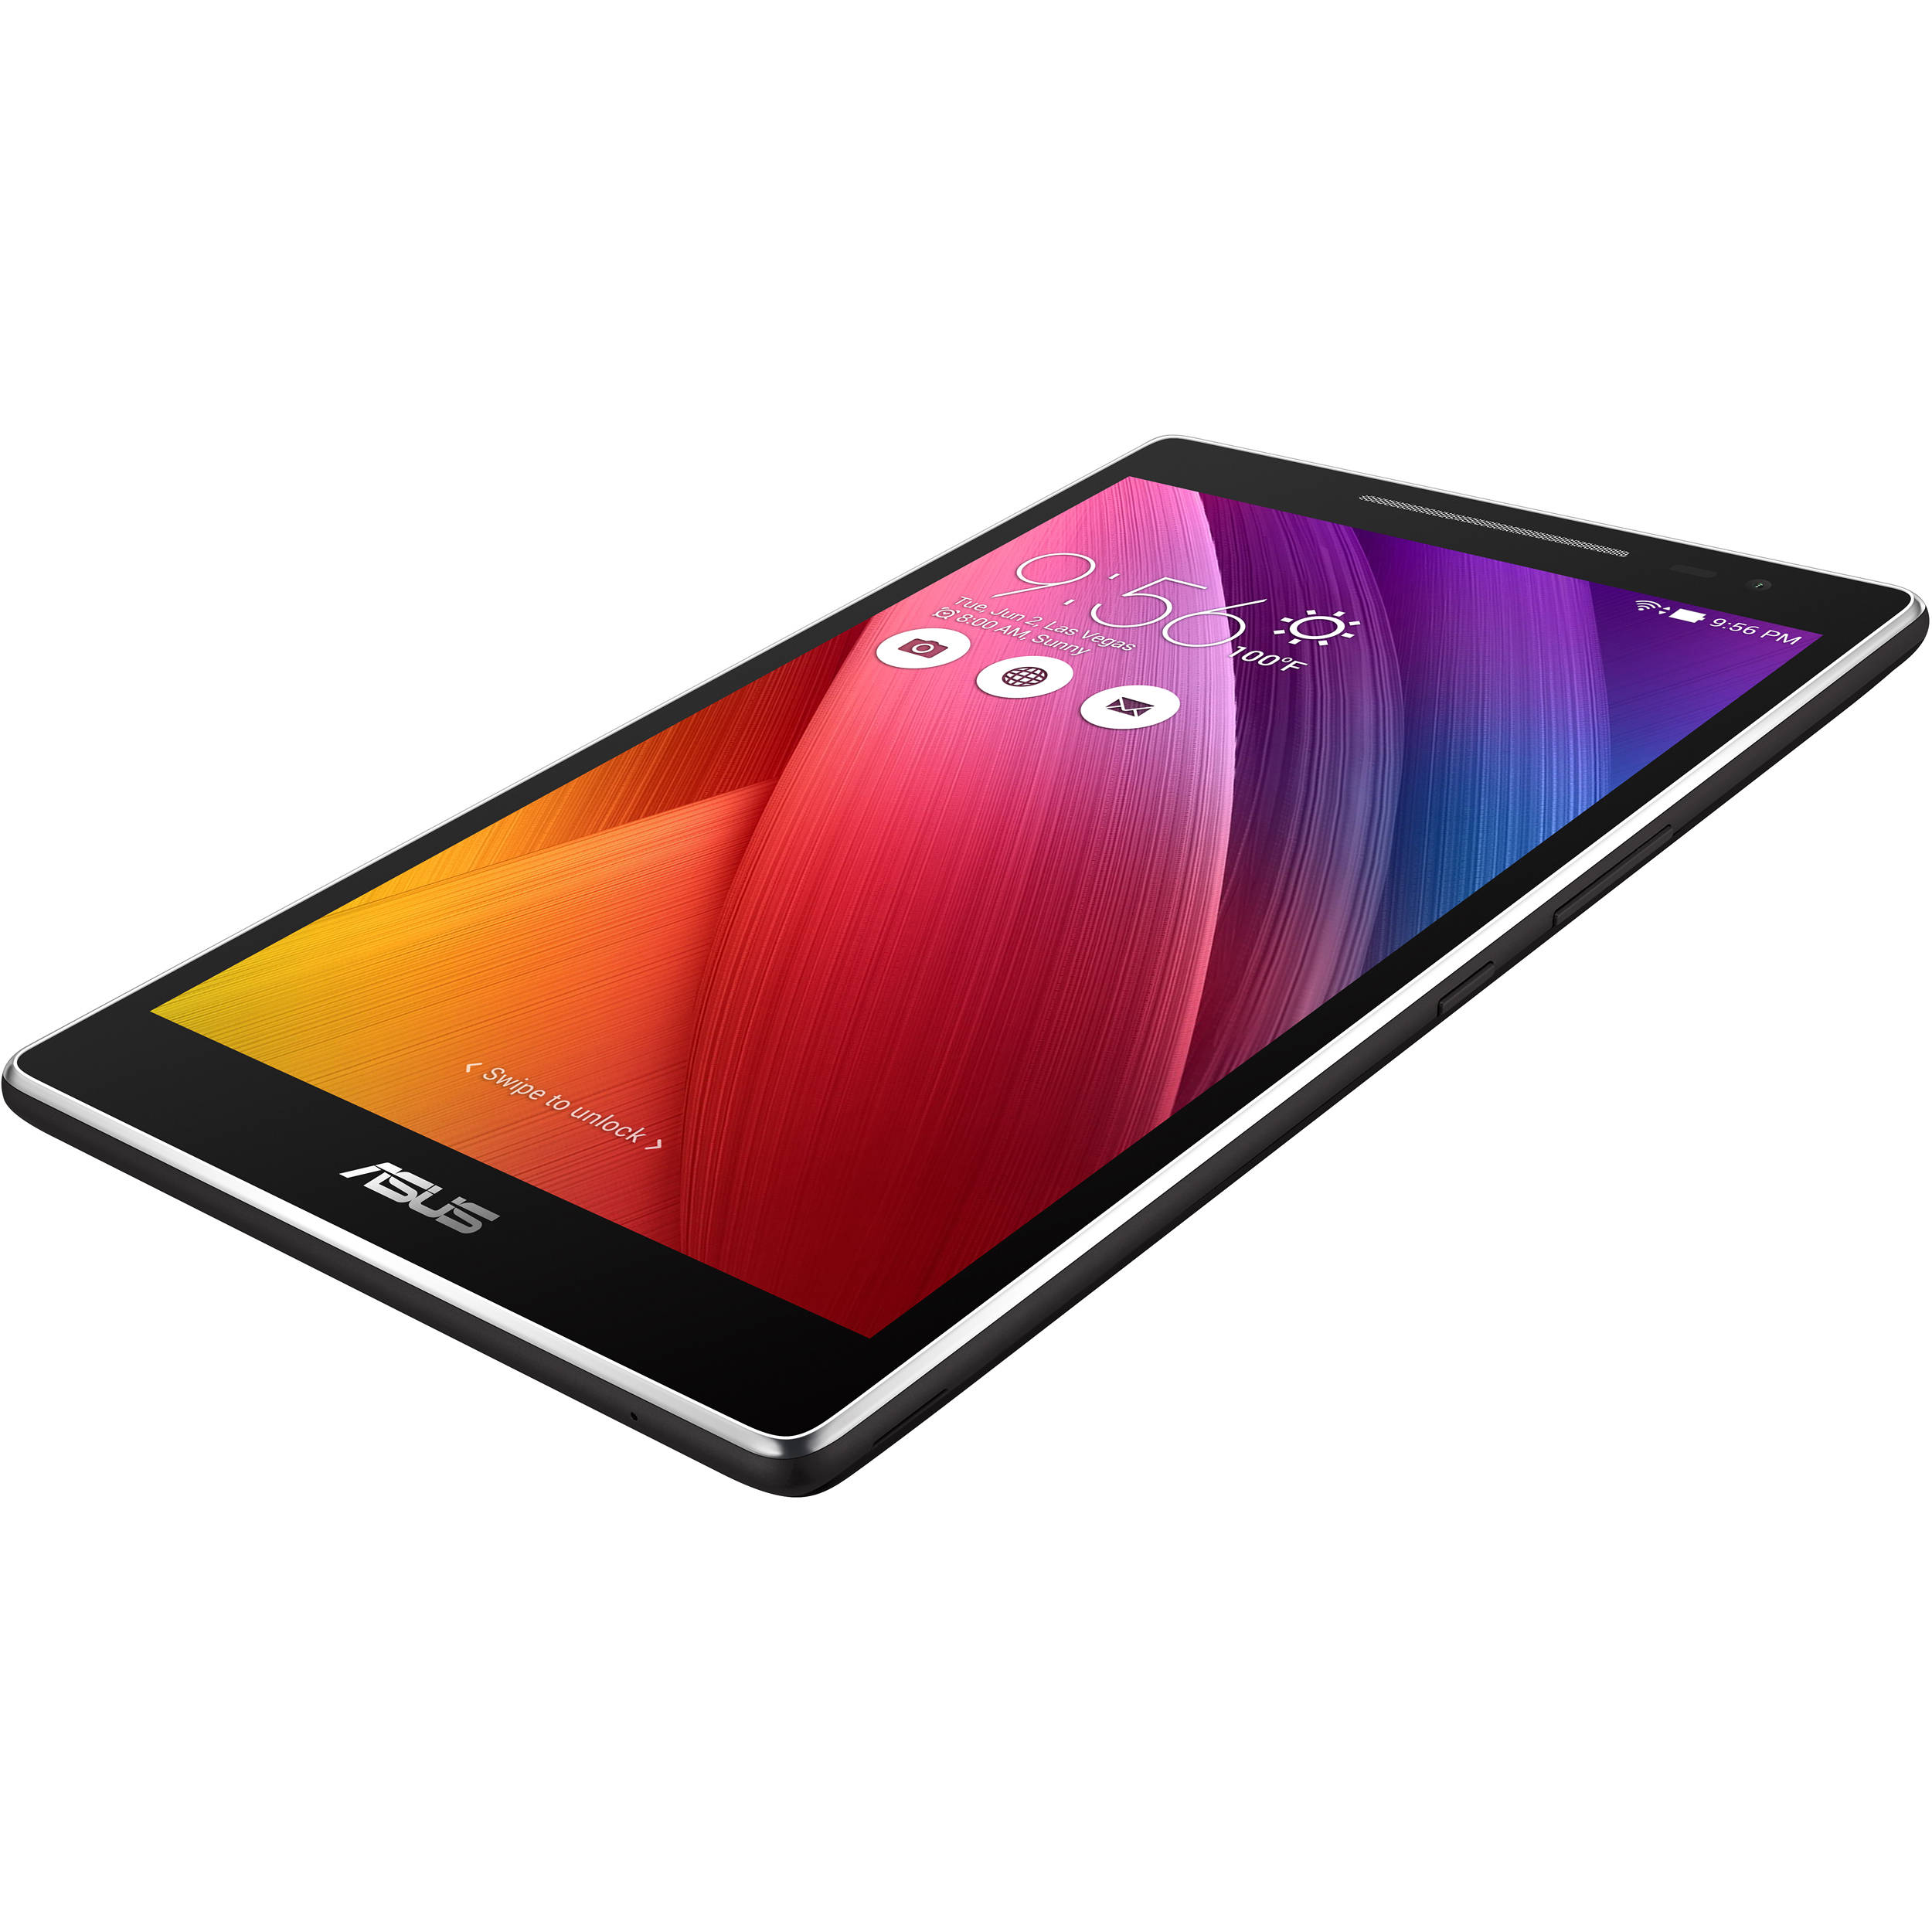 Asus 8 Zenpad 8 0 Z380m 16gb Tablet Z380m Gr B H